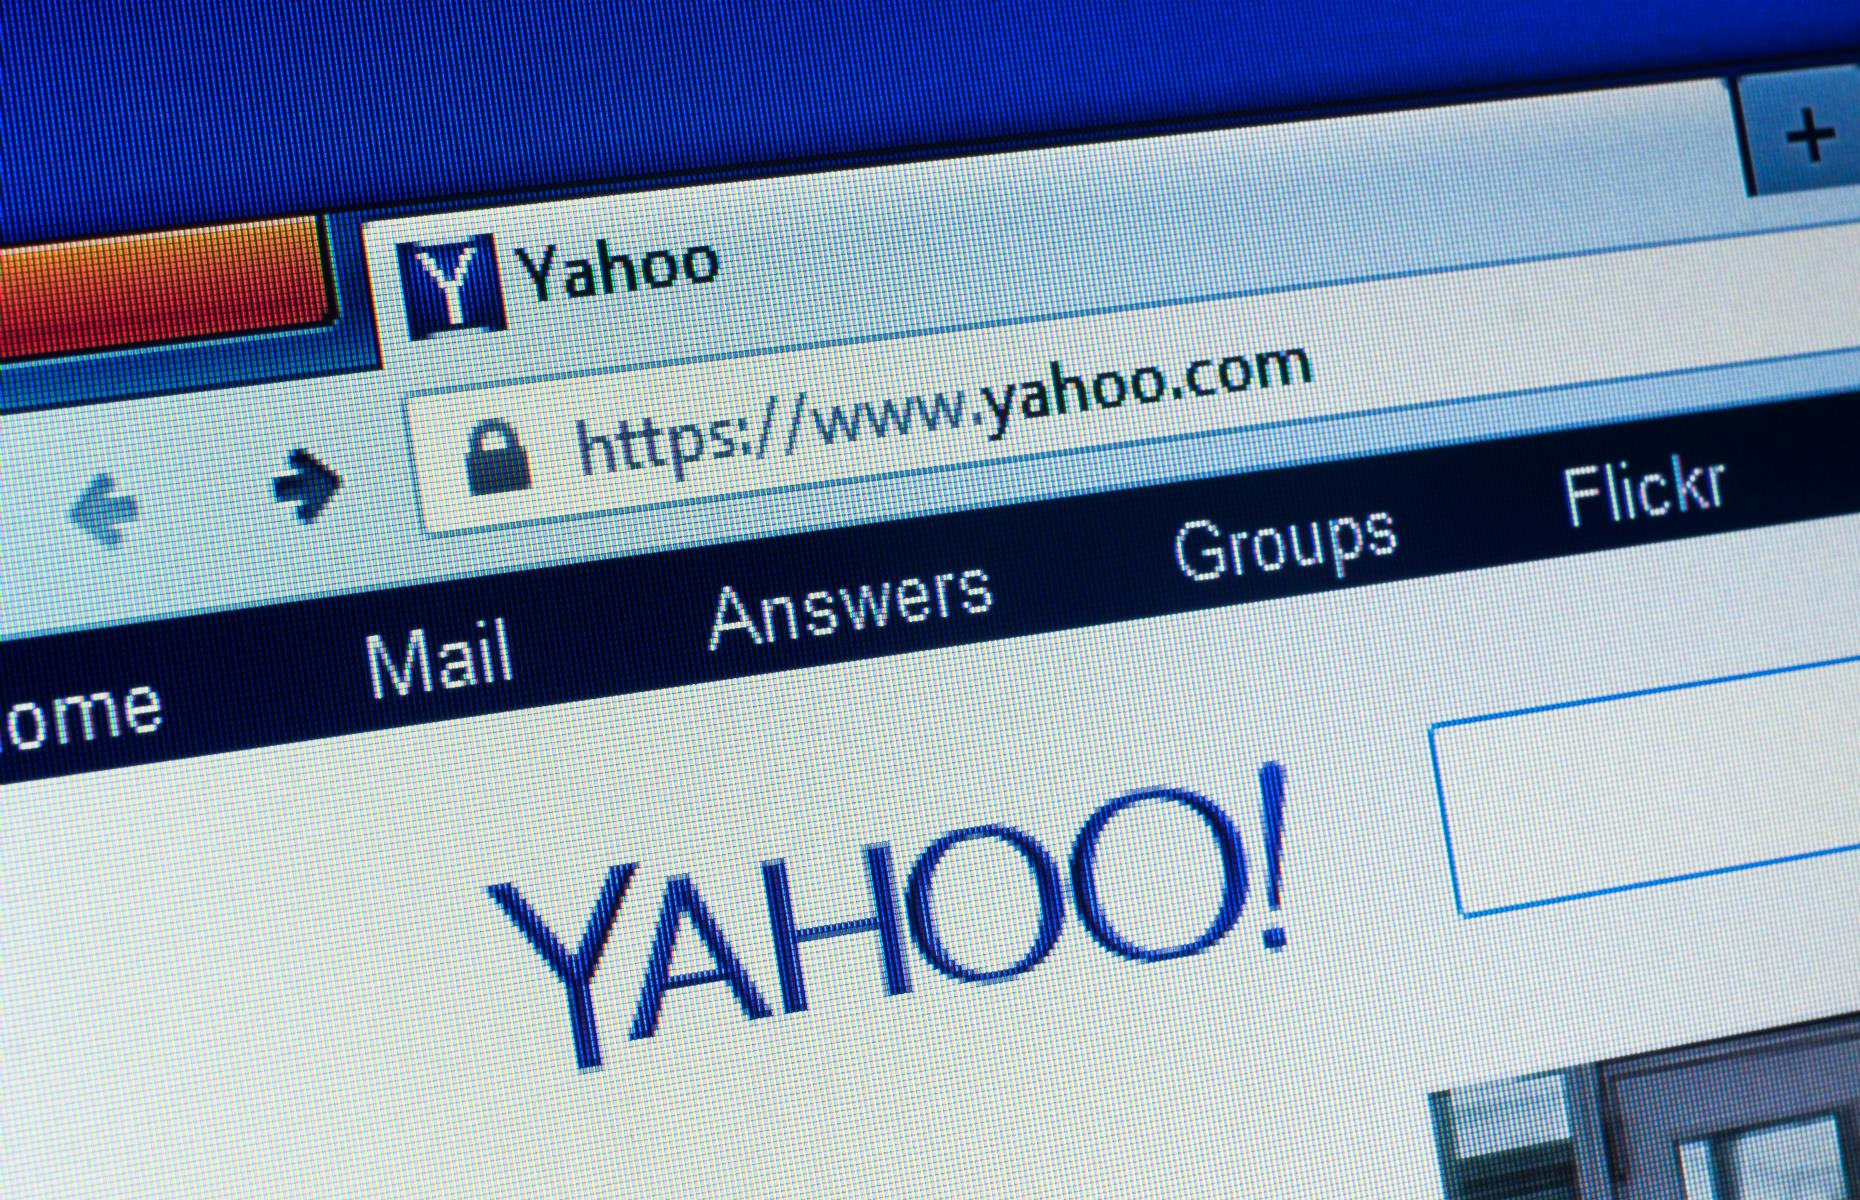 Yahoo! and broadcast.com: 1999